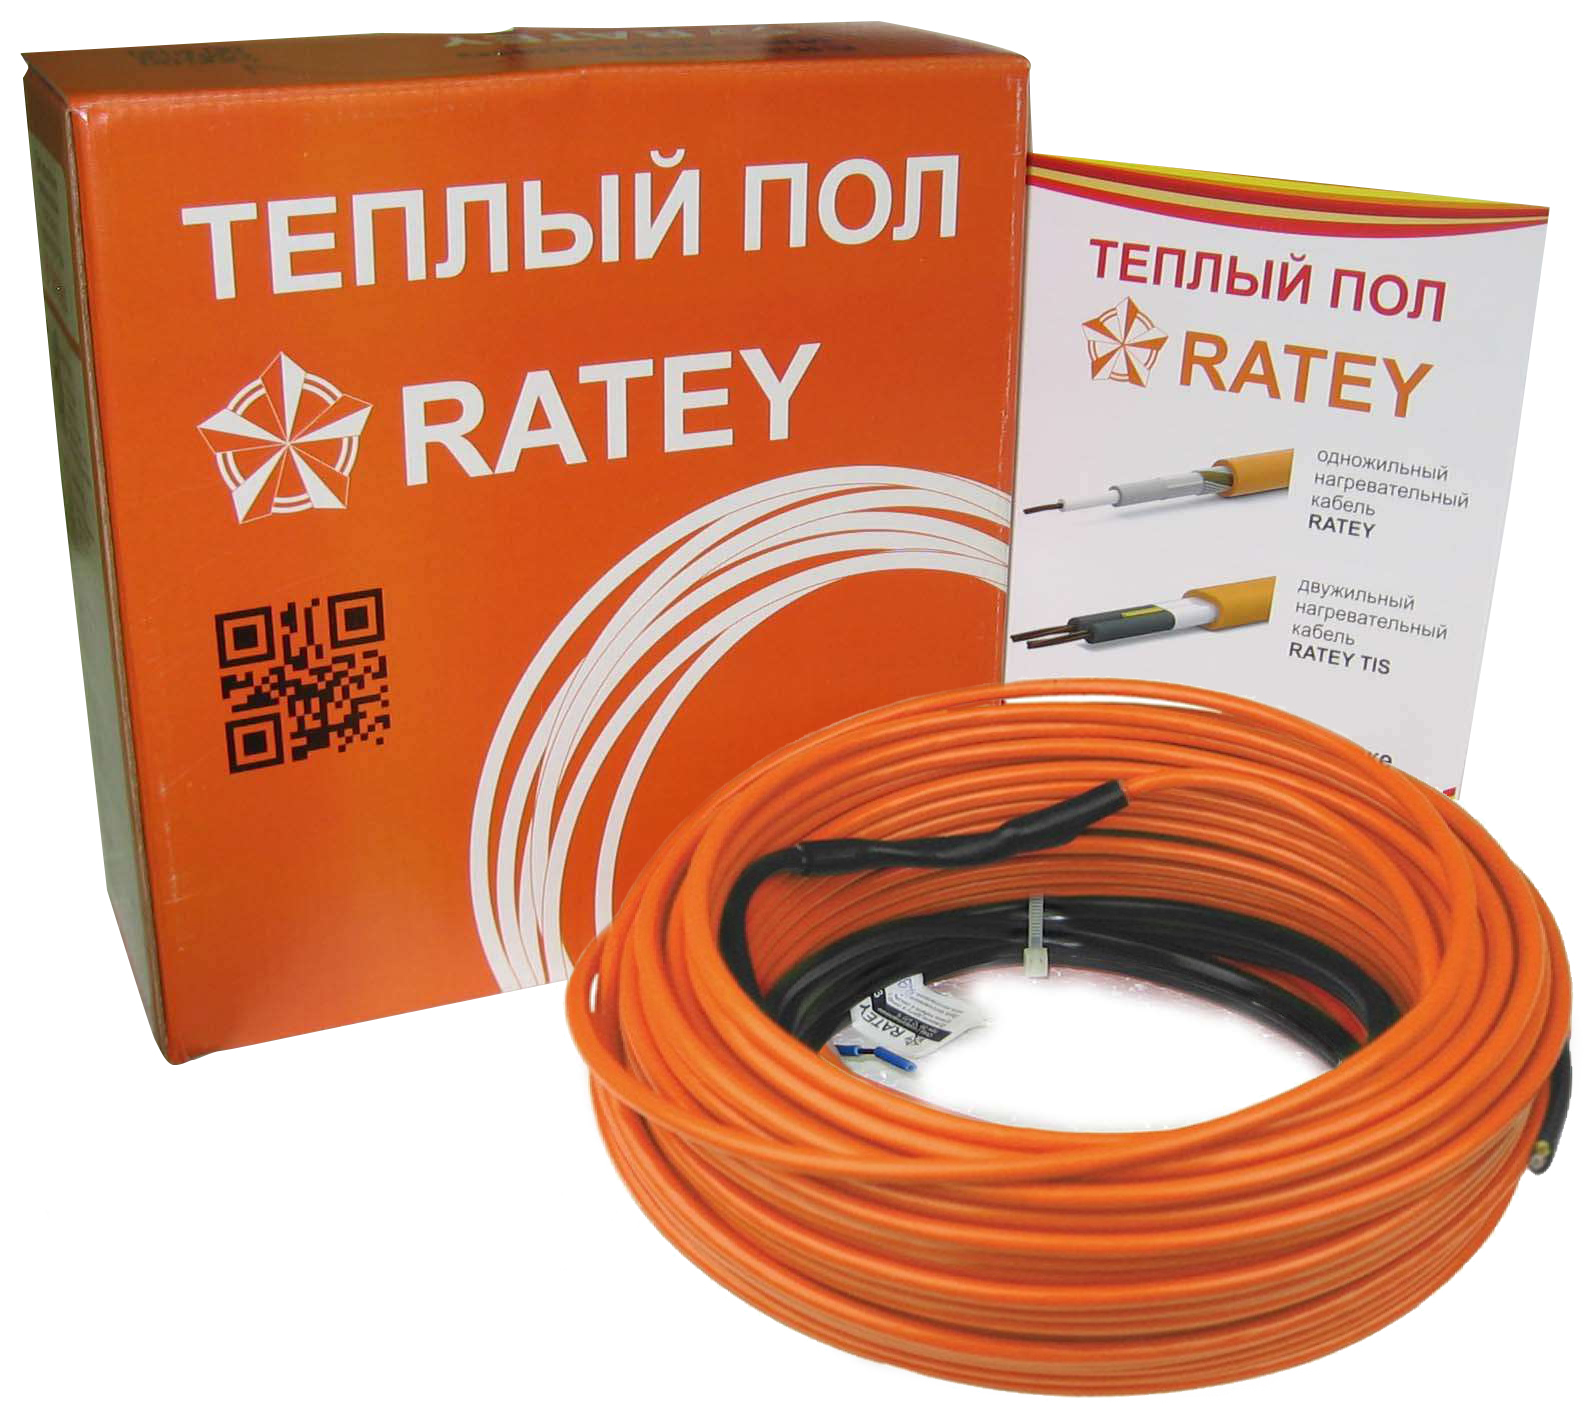 Електрична тепла підлога Ratey RD1 0.560